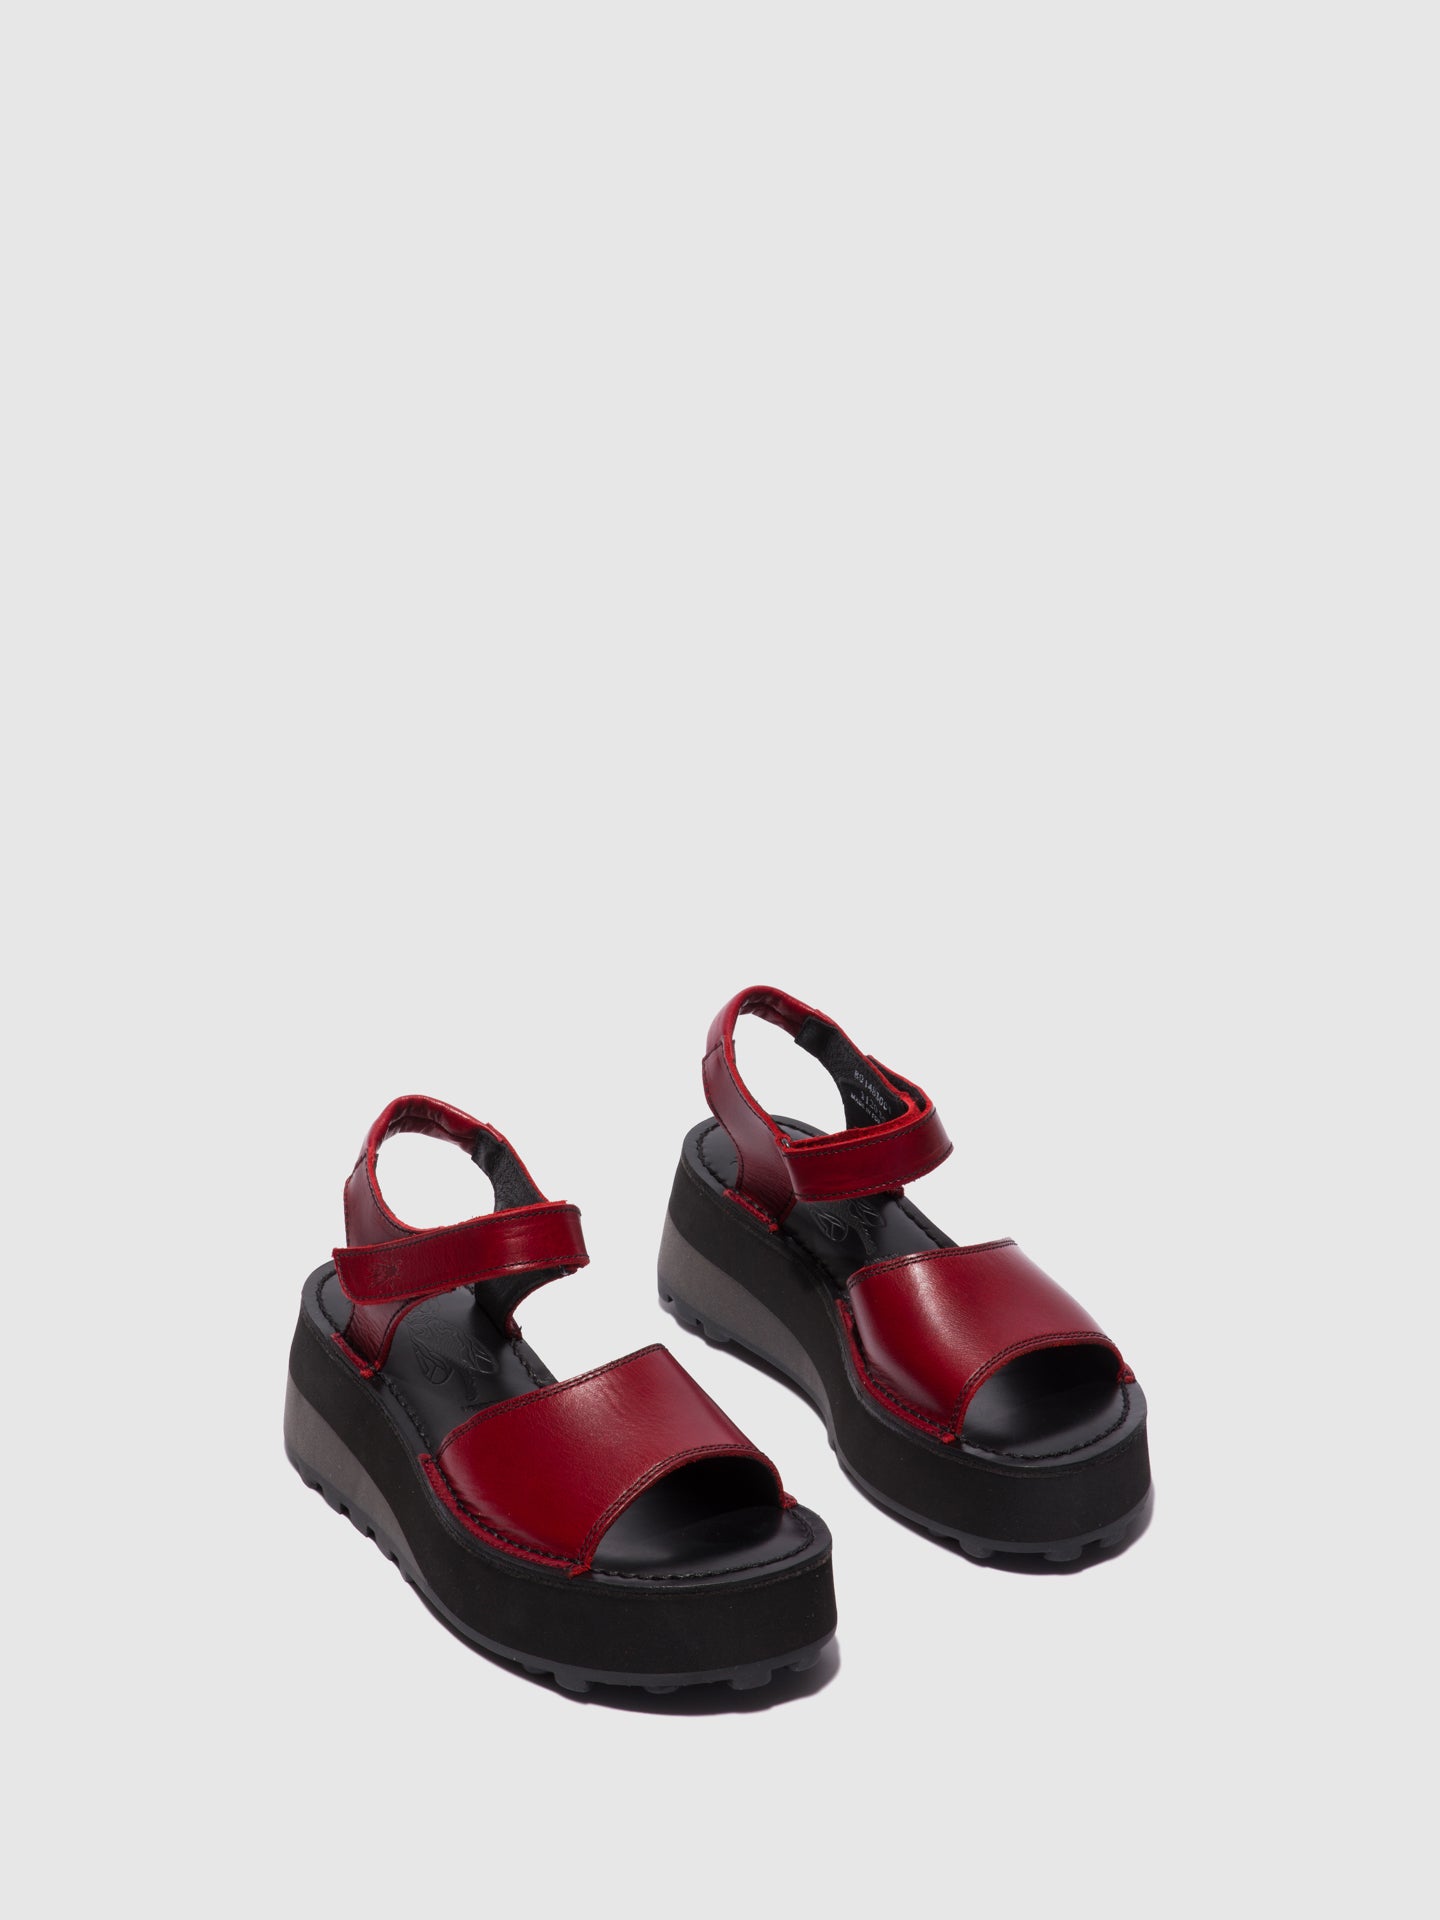 Fly London Velcro Sandals HOST483FLY RED/BLACK